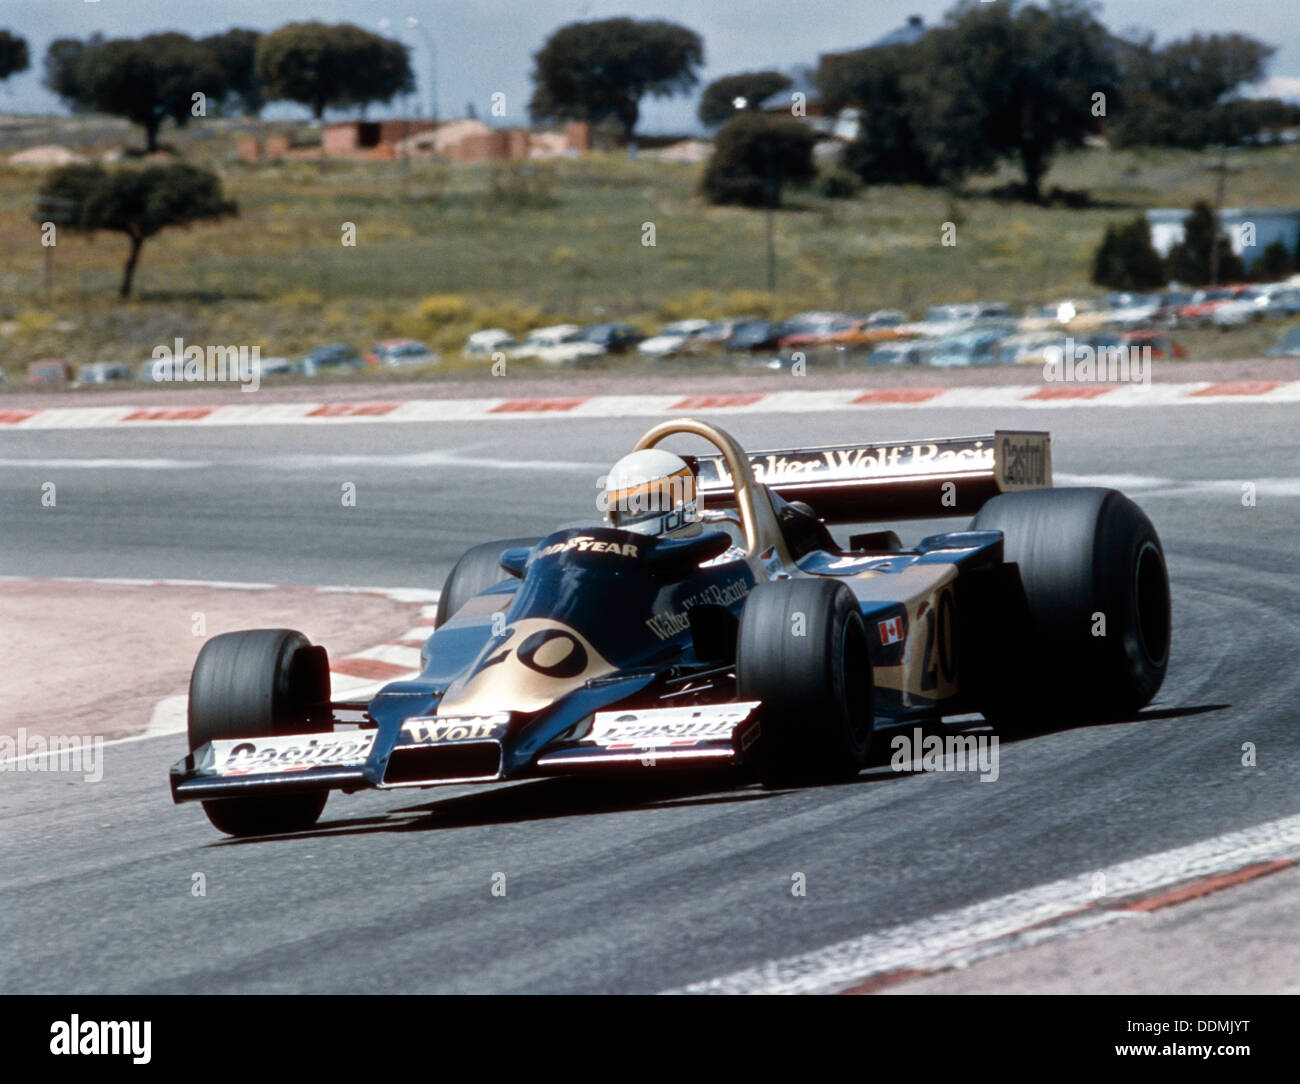 Jody Scheckter racing a Wolf-Cosworth WR2, Spanish Grand Prix, Jarama, Spain, 1977. Artist: Unknown Stock Photo